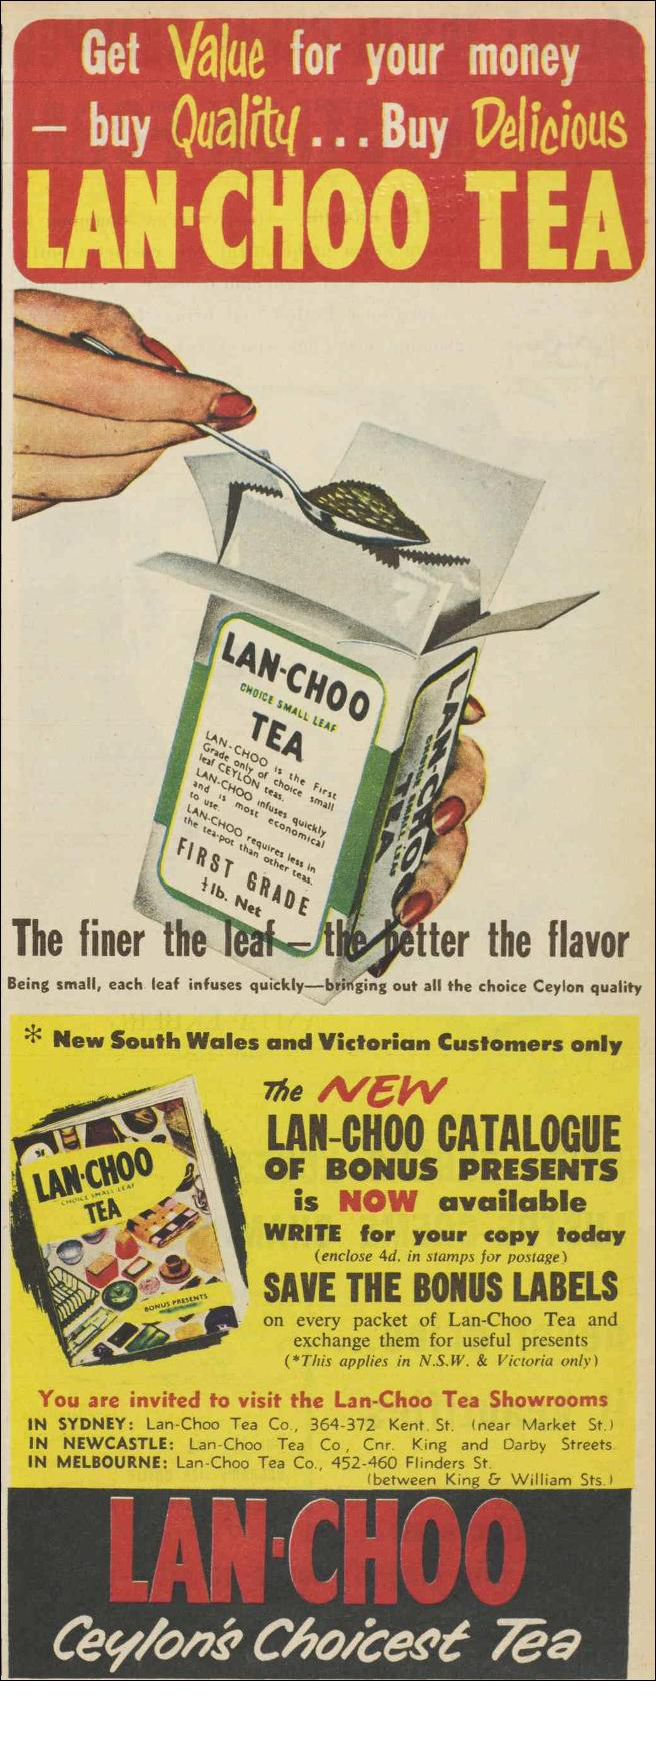 92.Lan-Choo - Get Value buy Quality